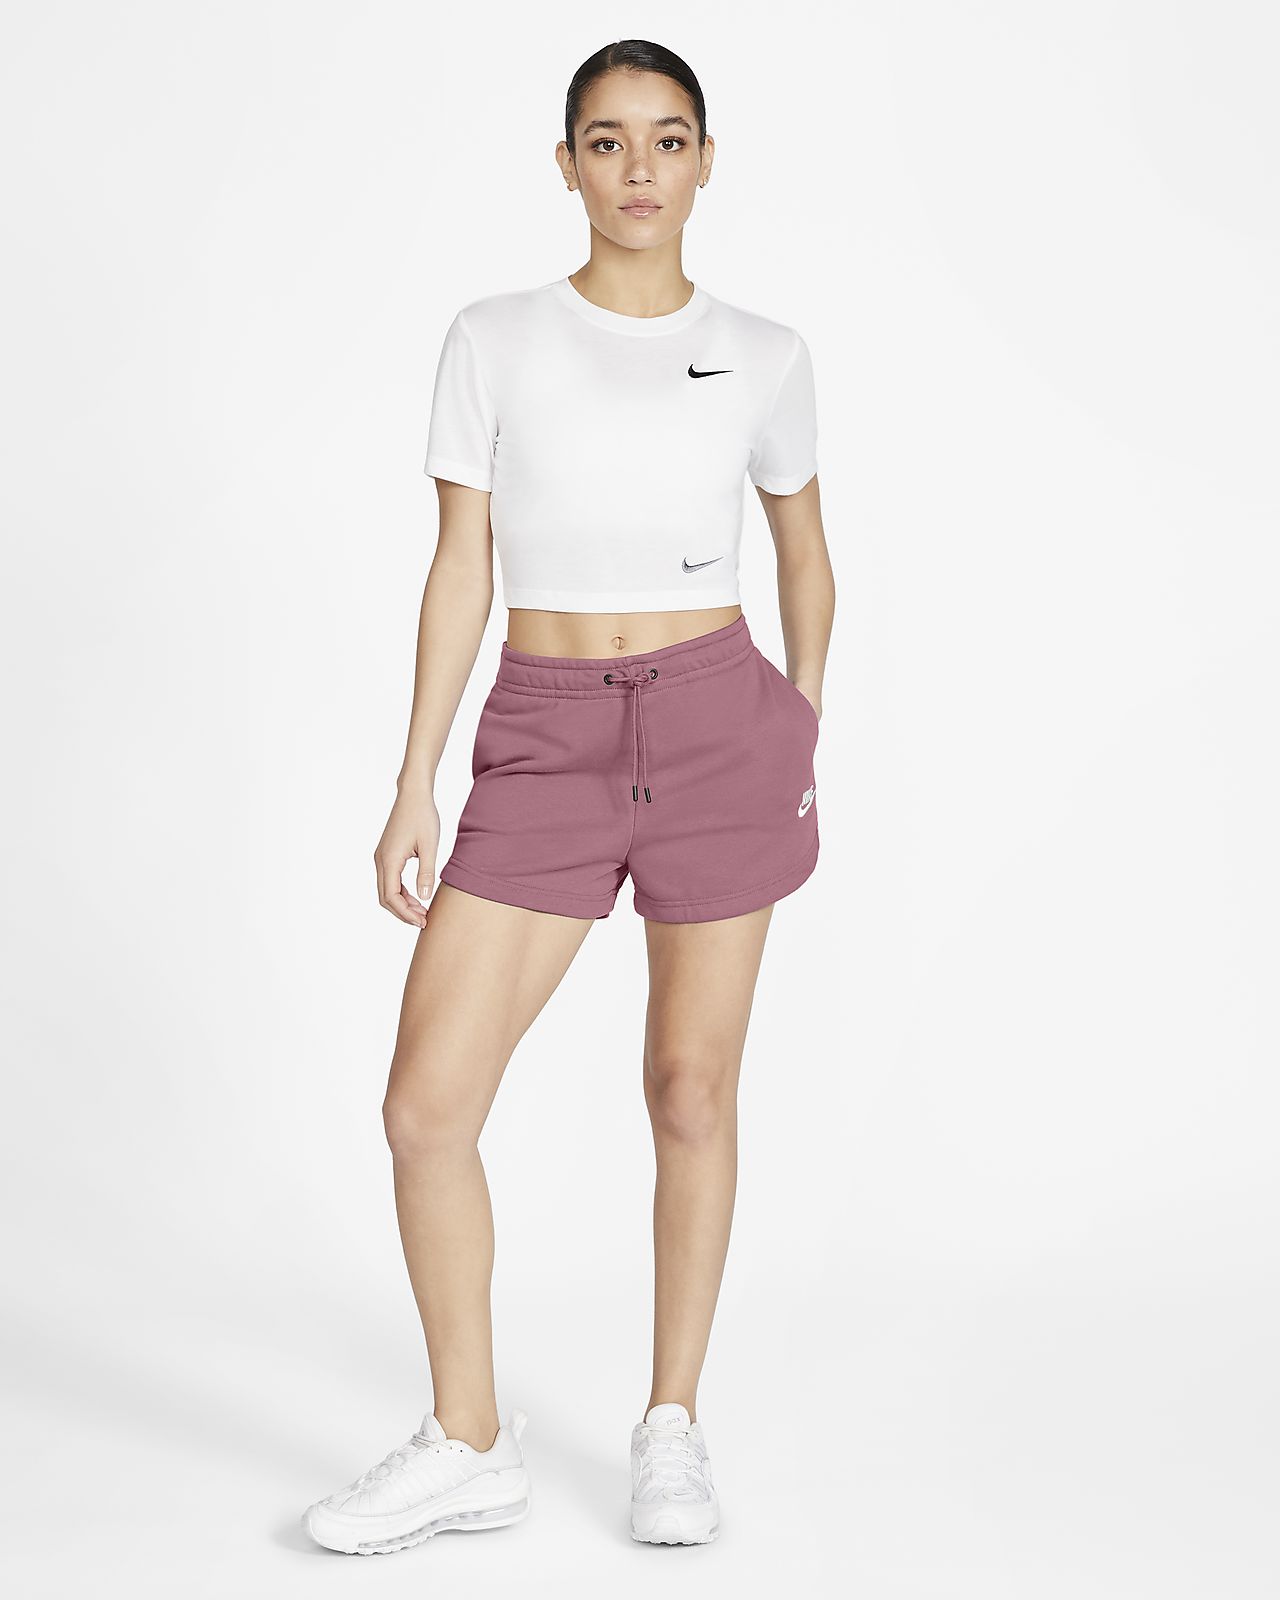 nike grey shorts and crop top set